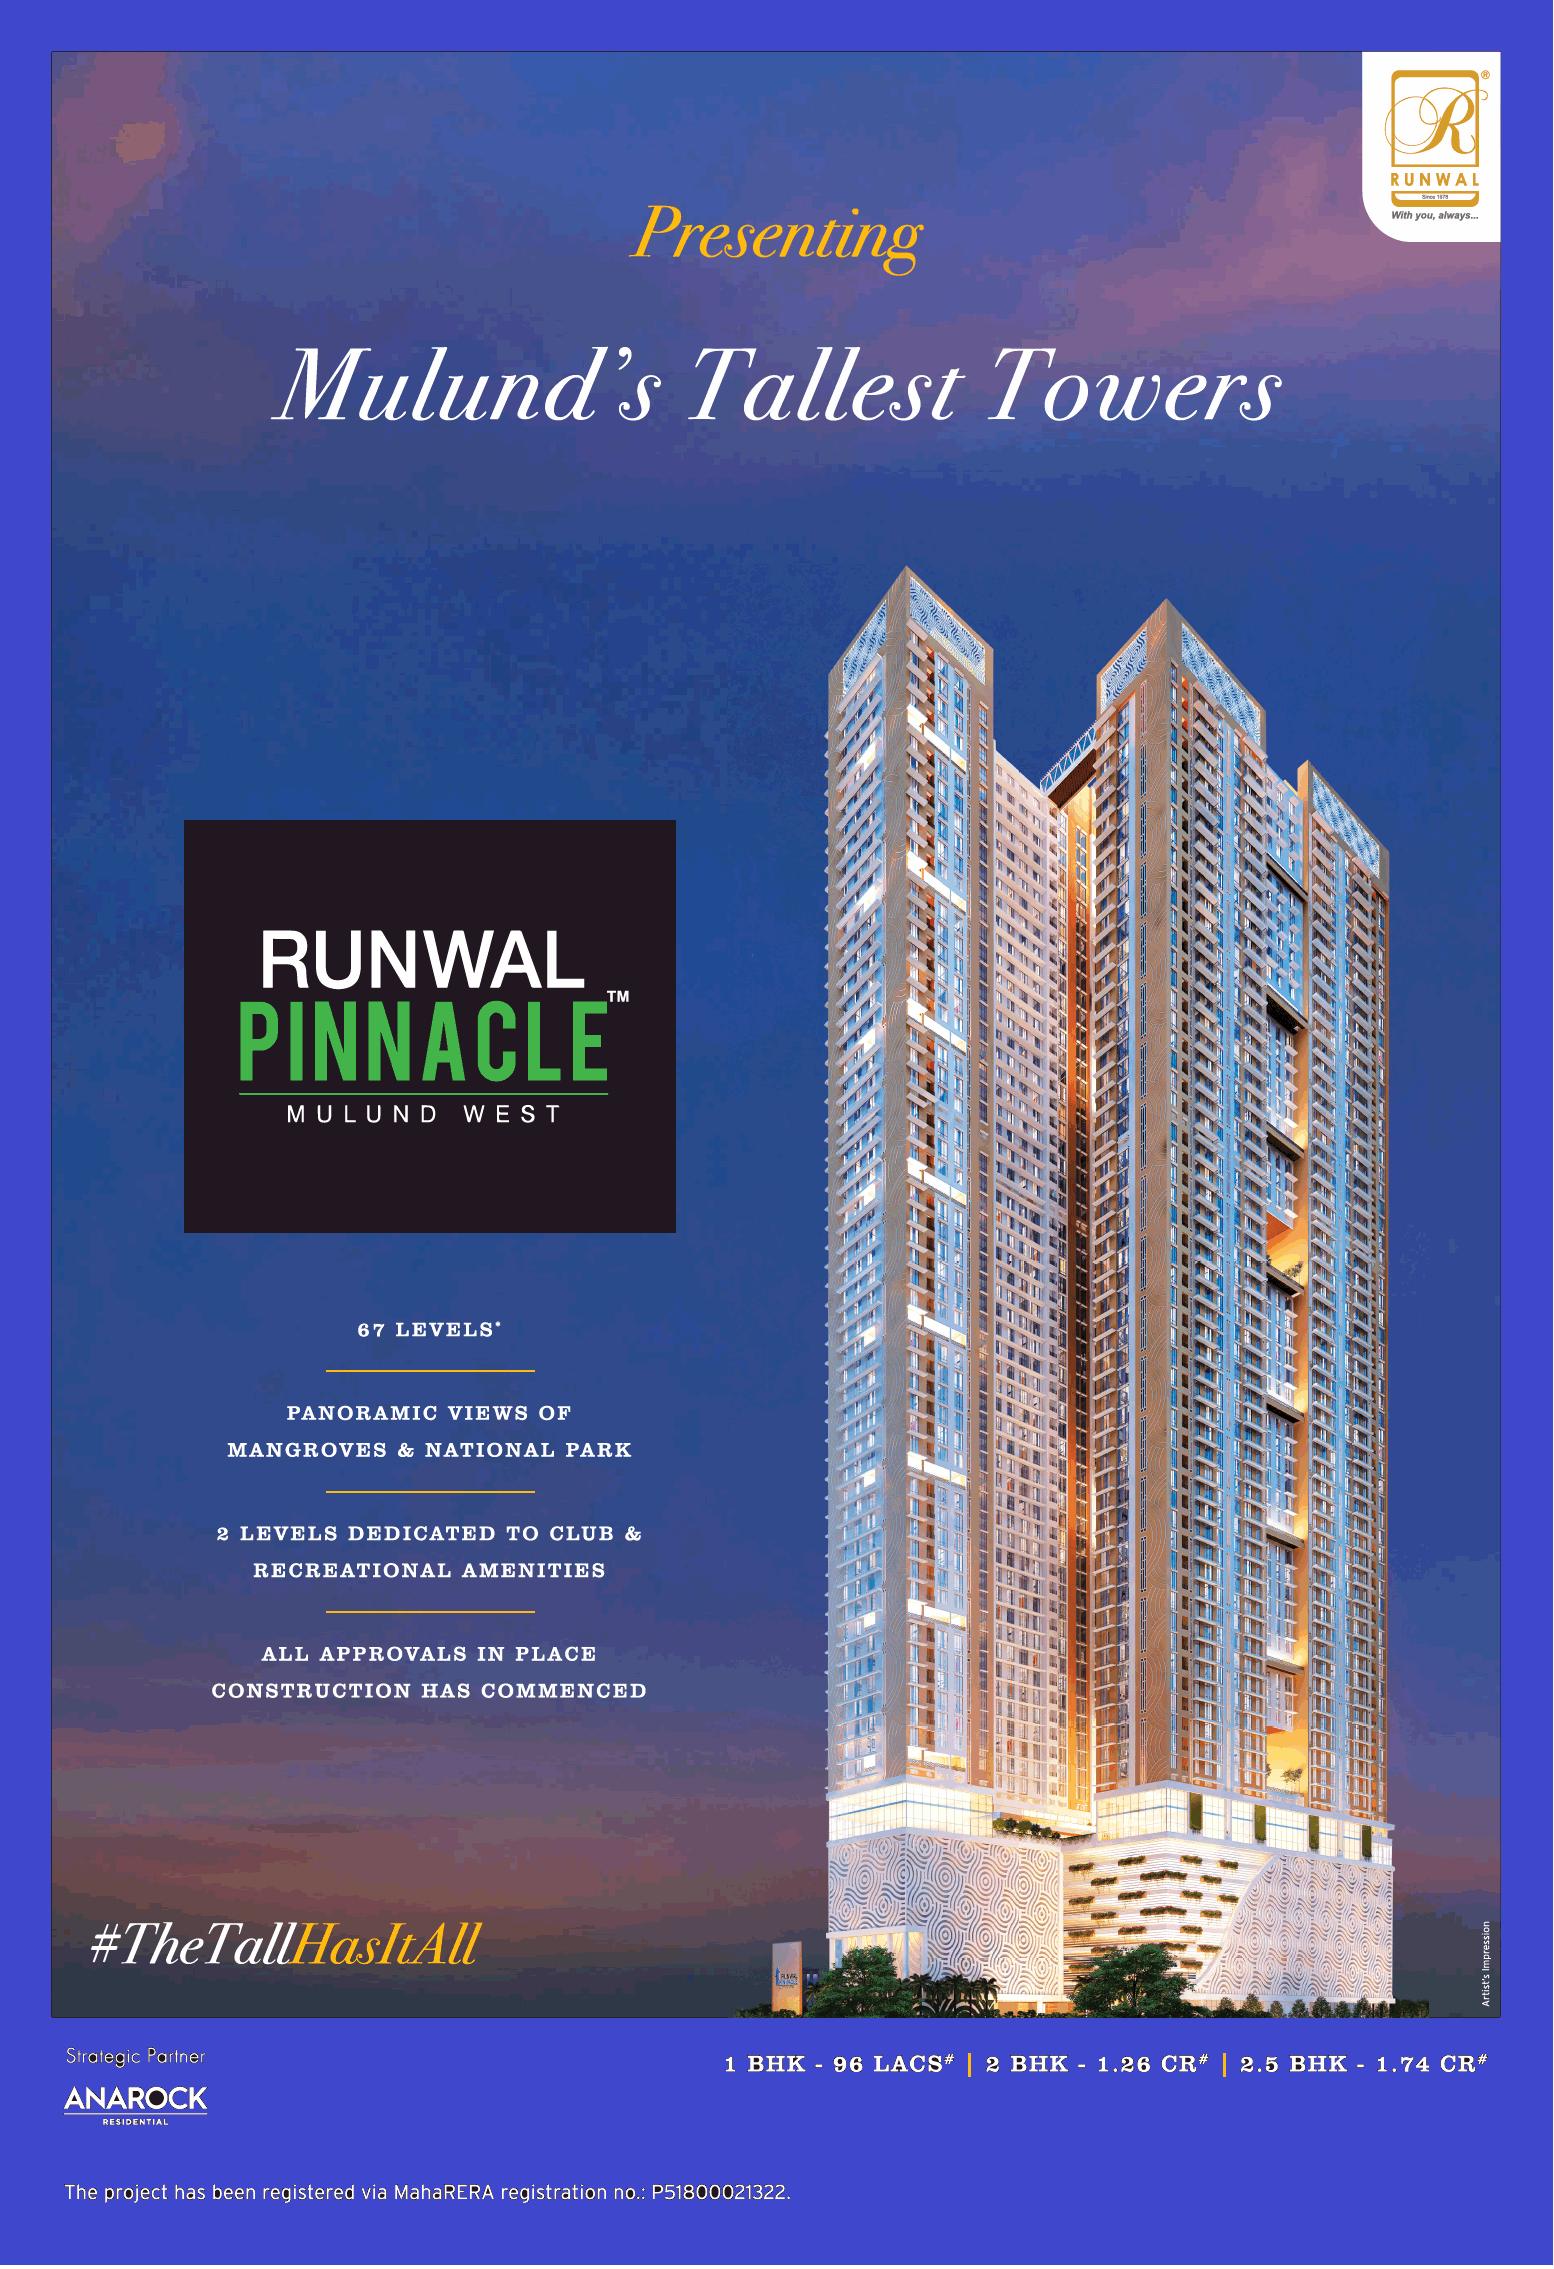 Presenting mulund's tallest towers at Runwal Pinnacle, Mumbai Update